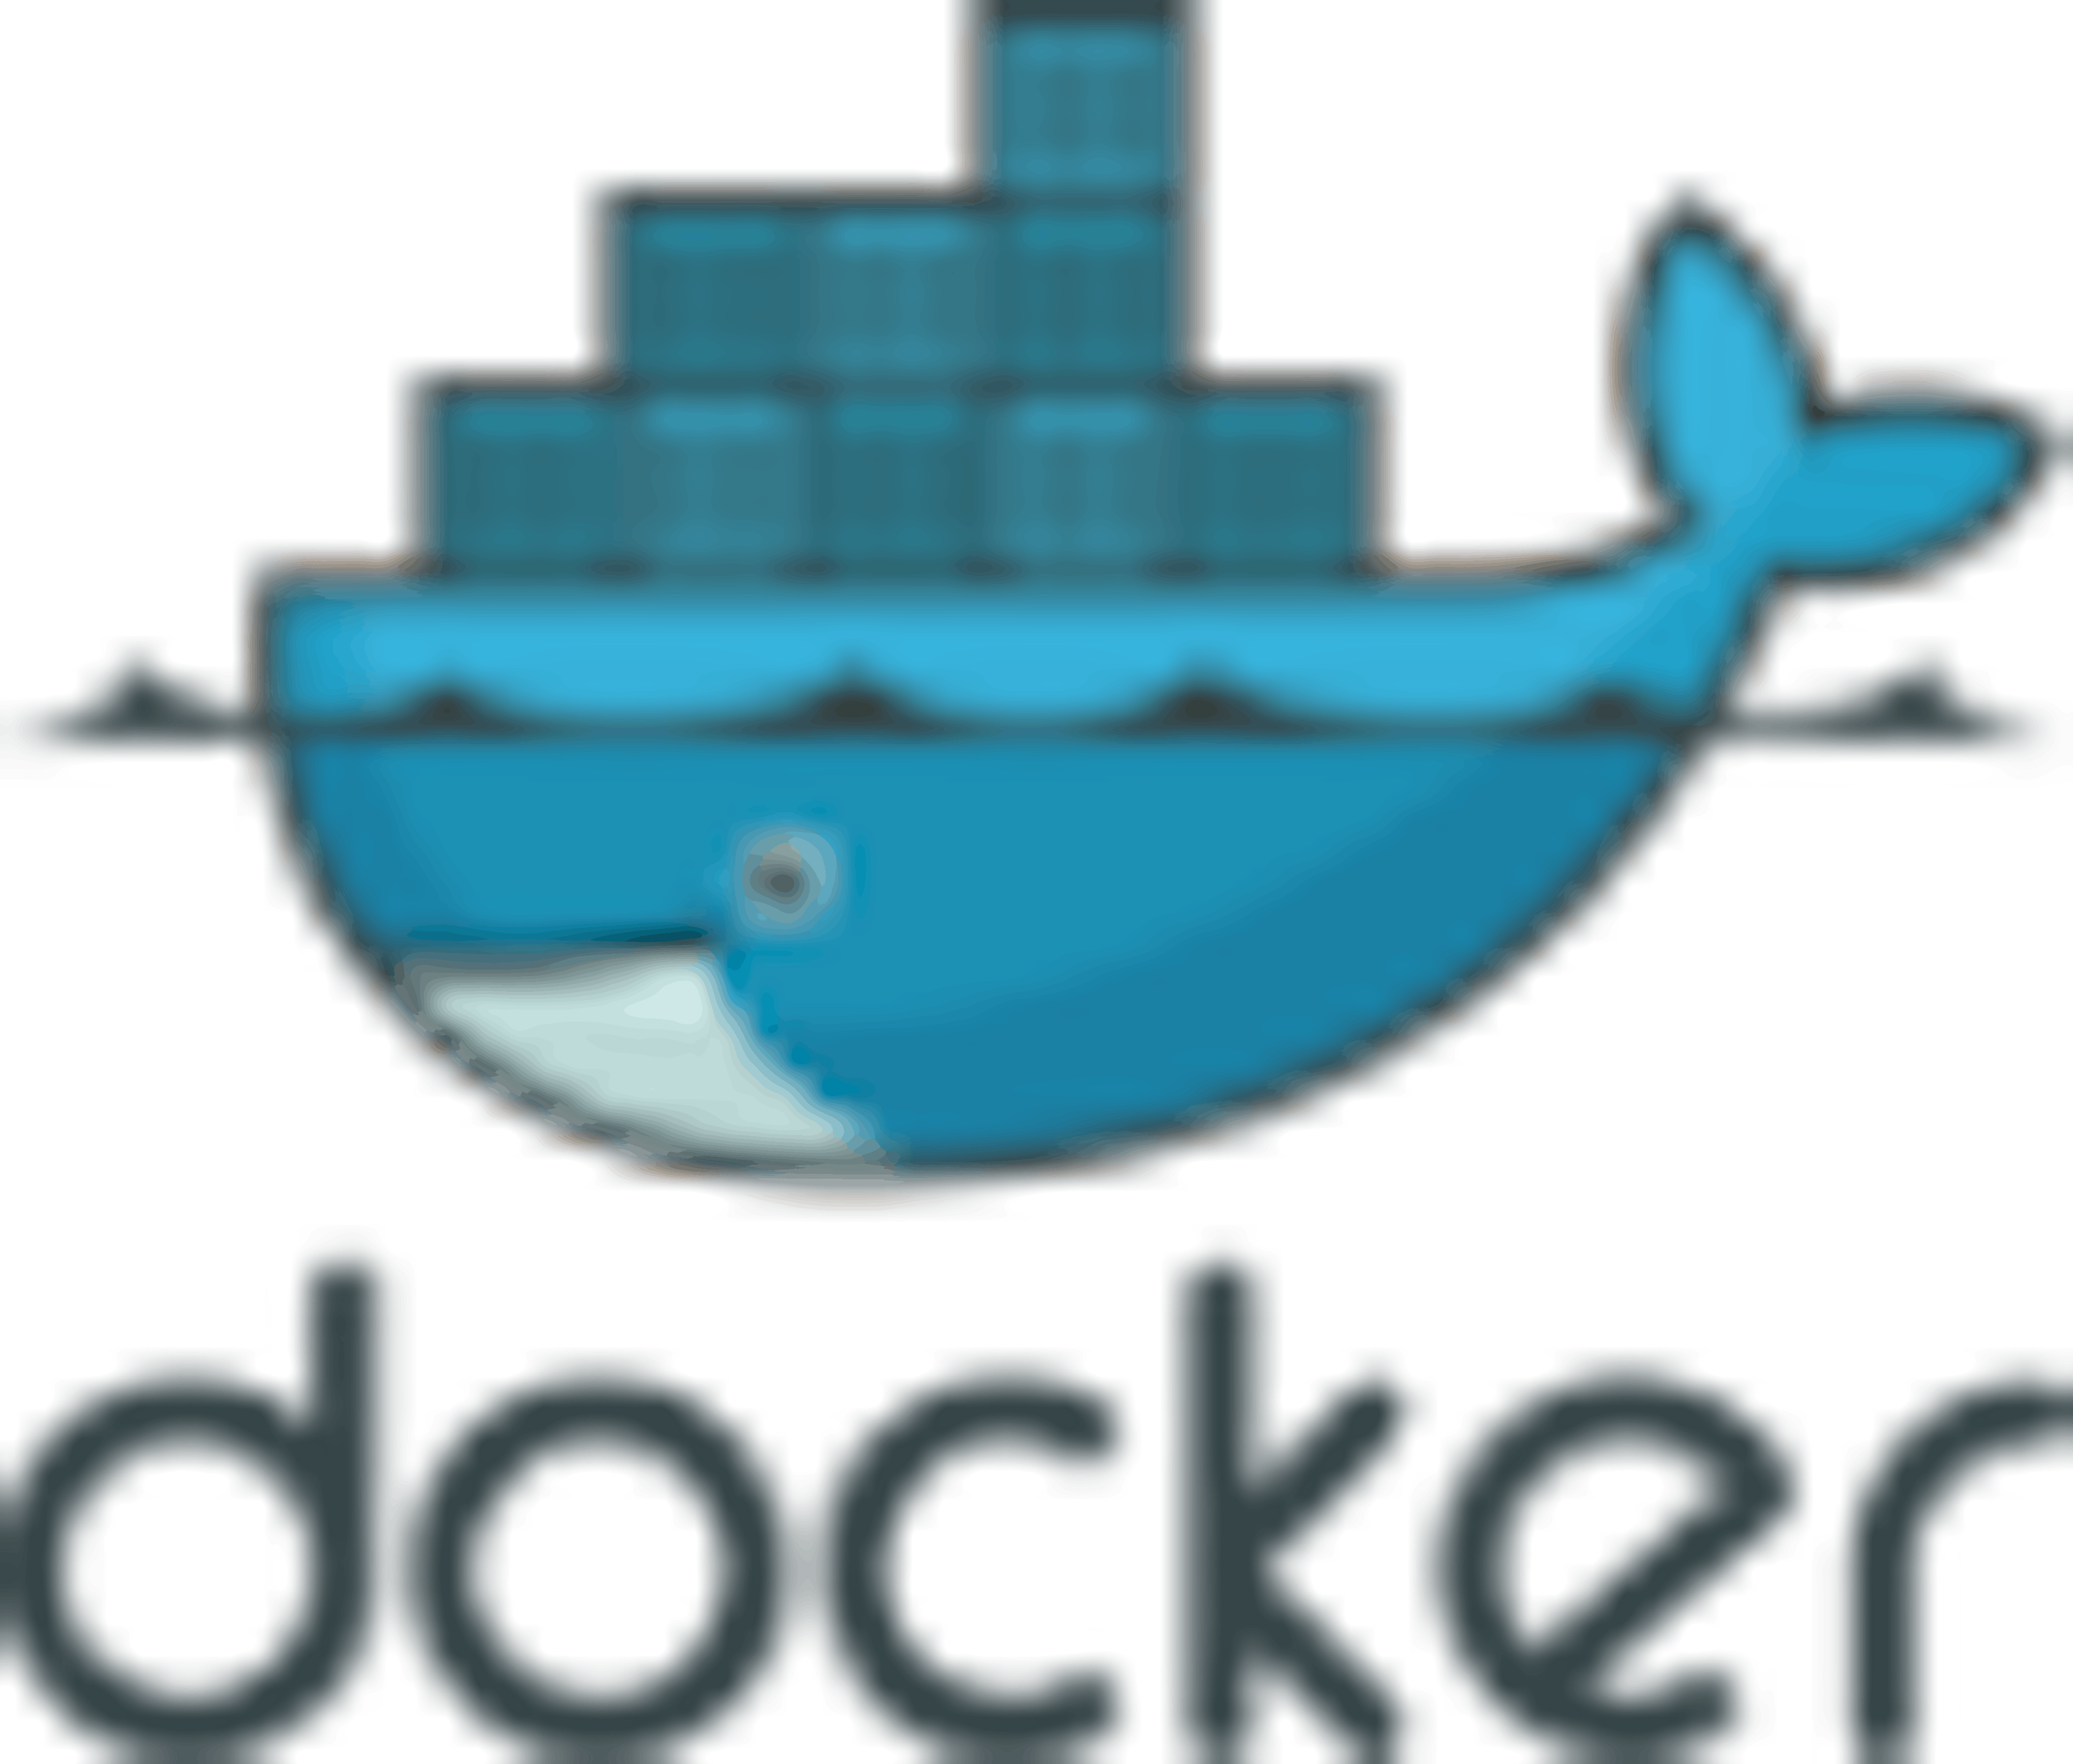 Logo Docker